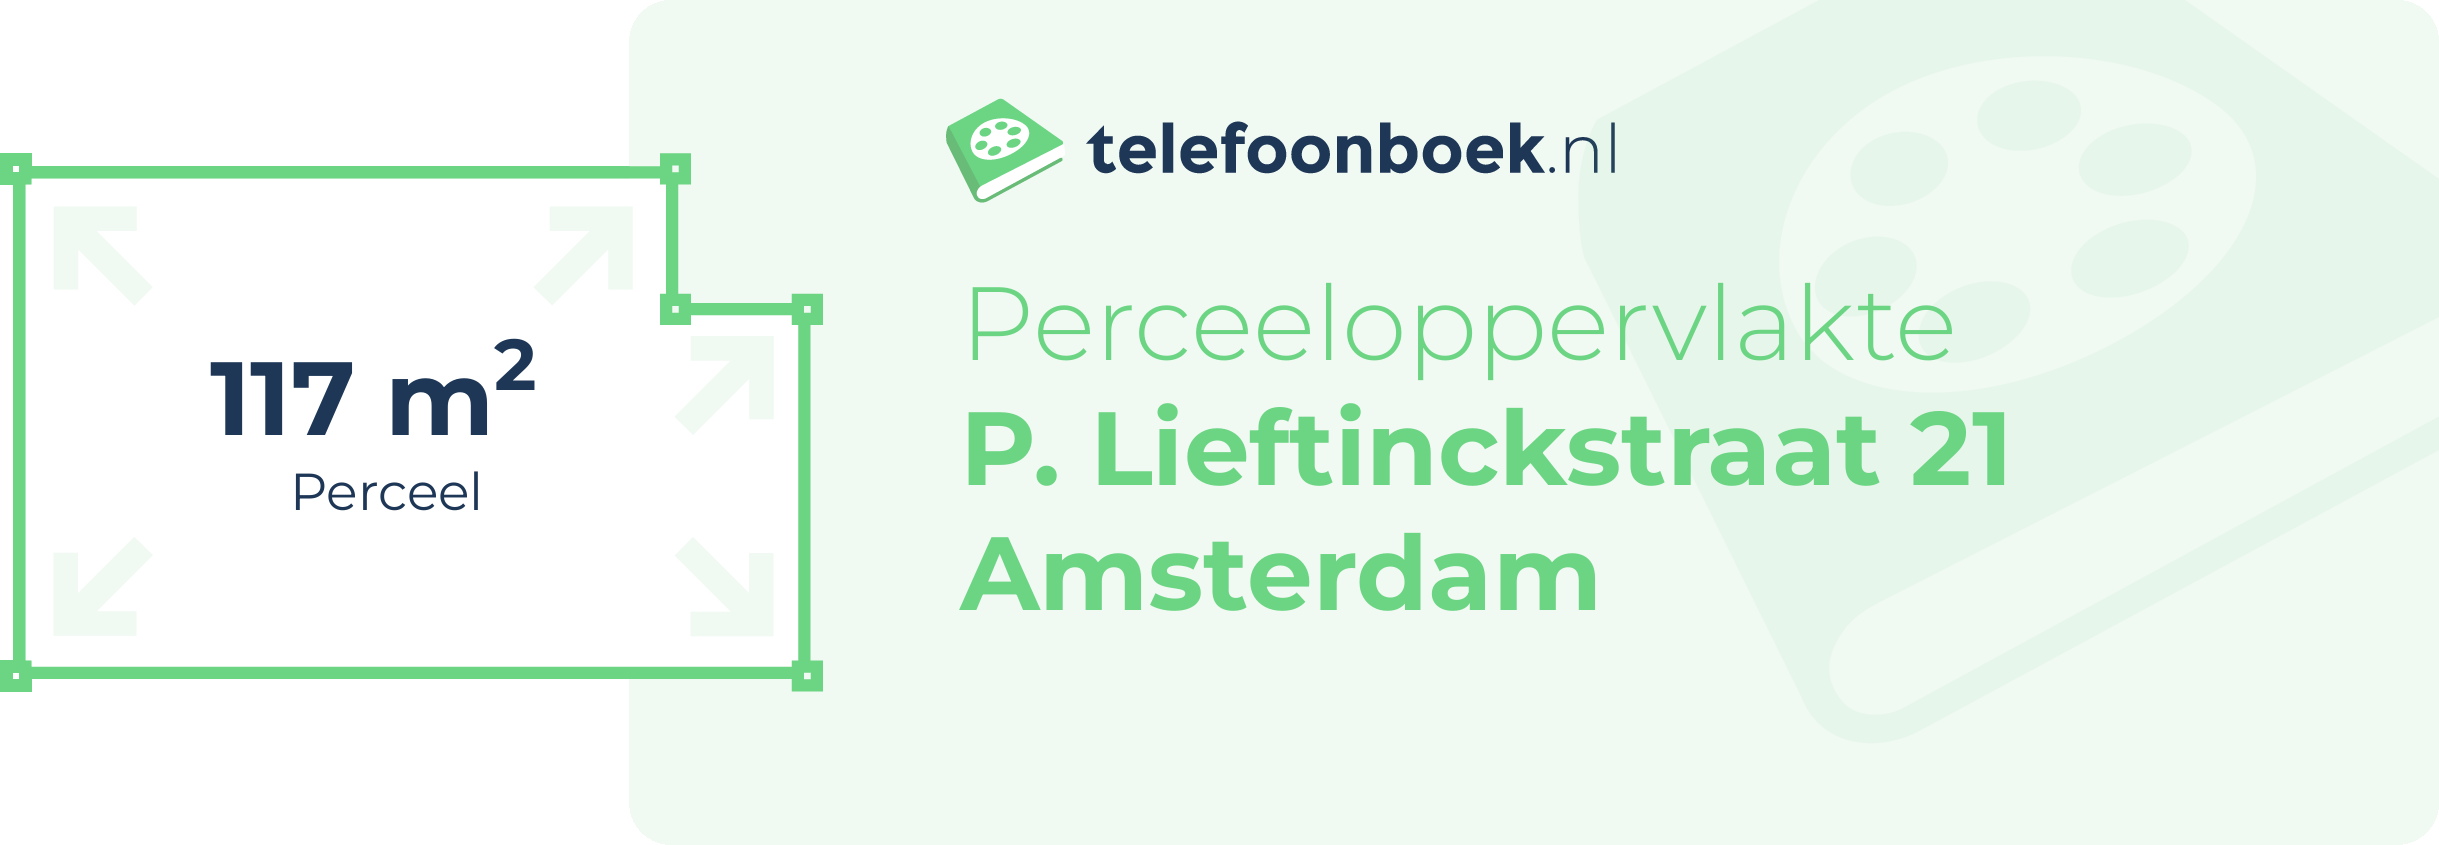 Perceeloppervlakte P. Lieftinckstraat 21 Amsterdam